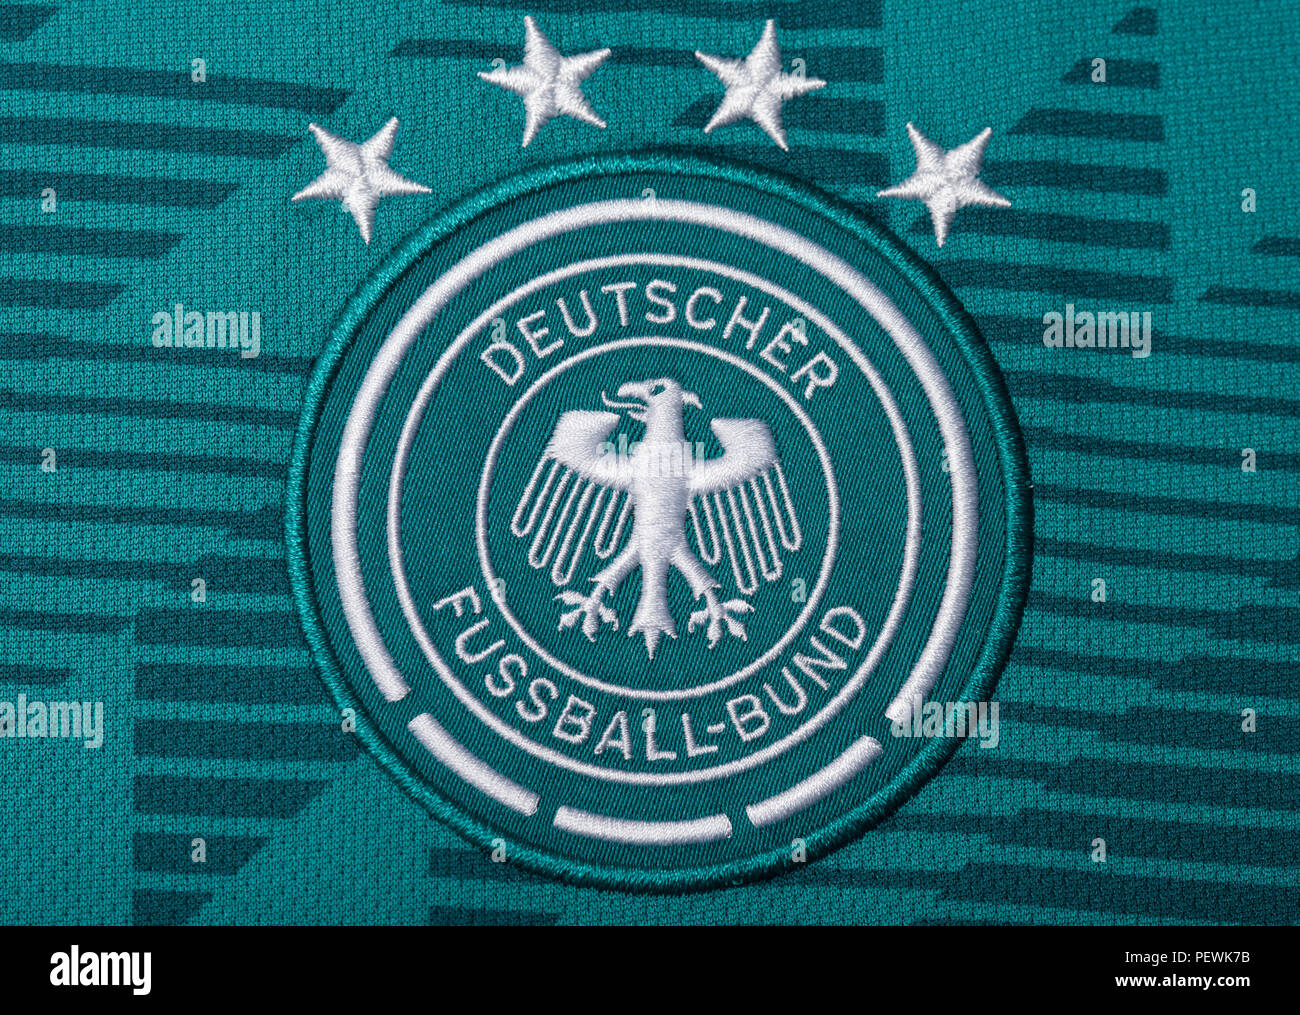 Germania Nationa football team kit. Coppa del Mondo FIFA 2018. Foto Stock